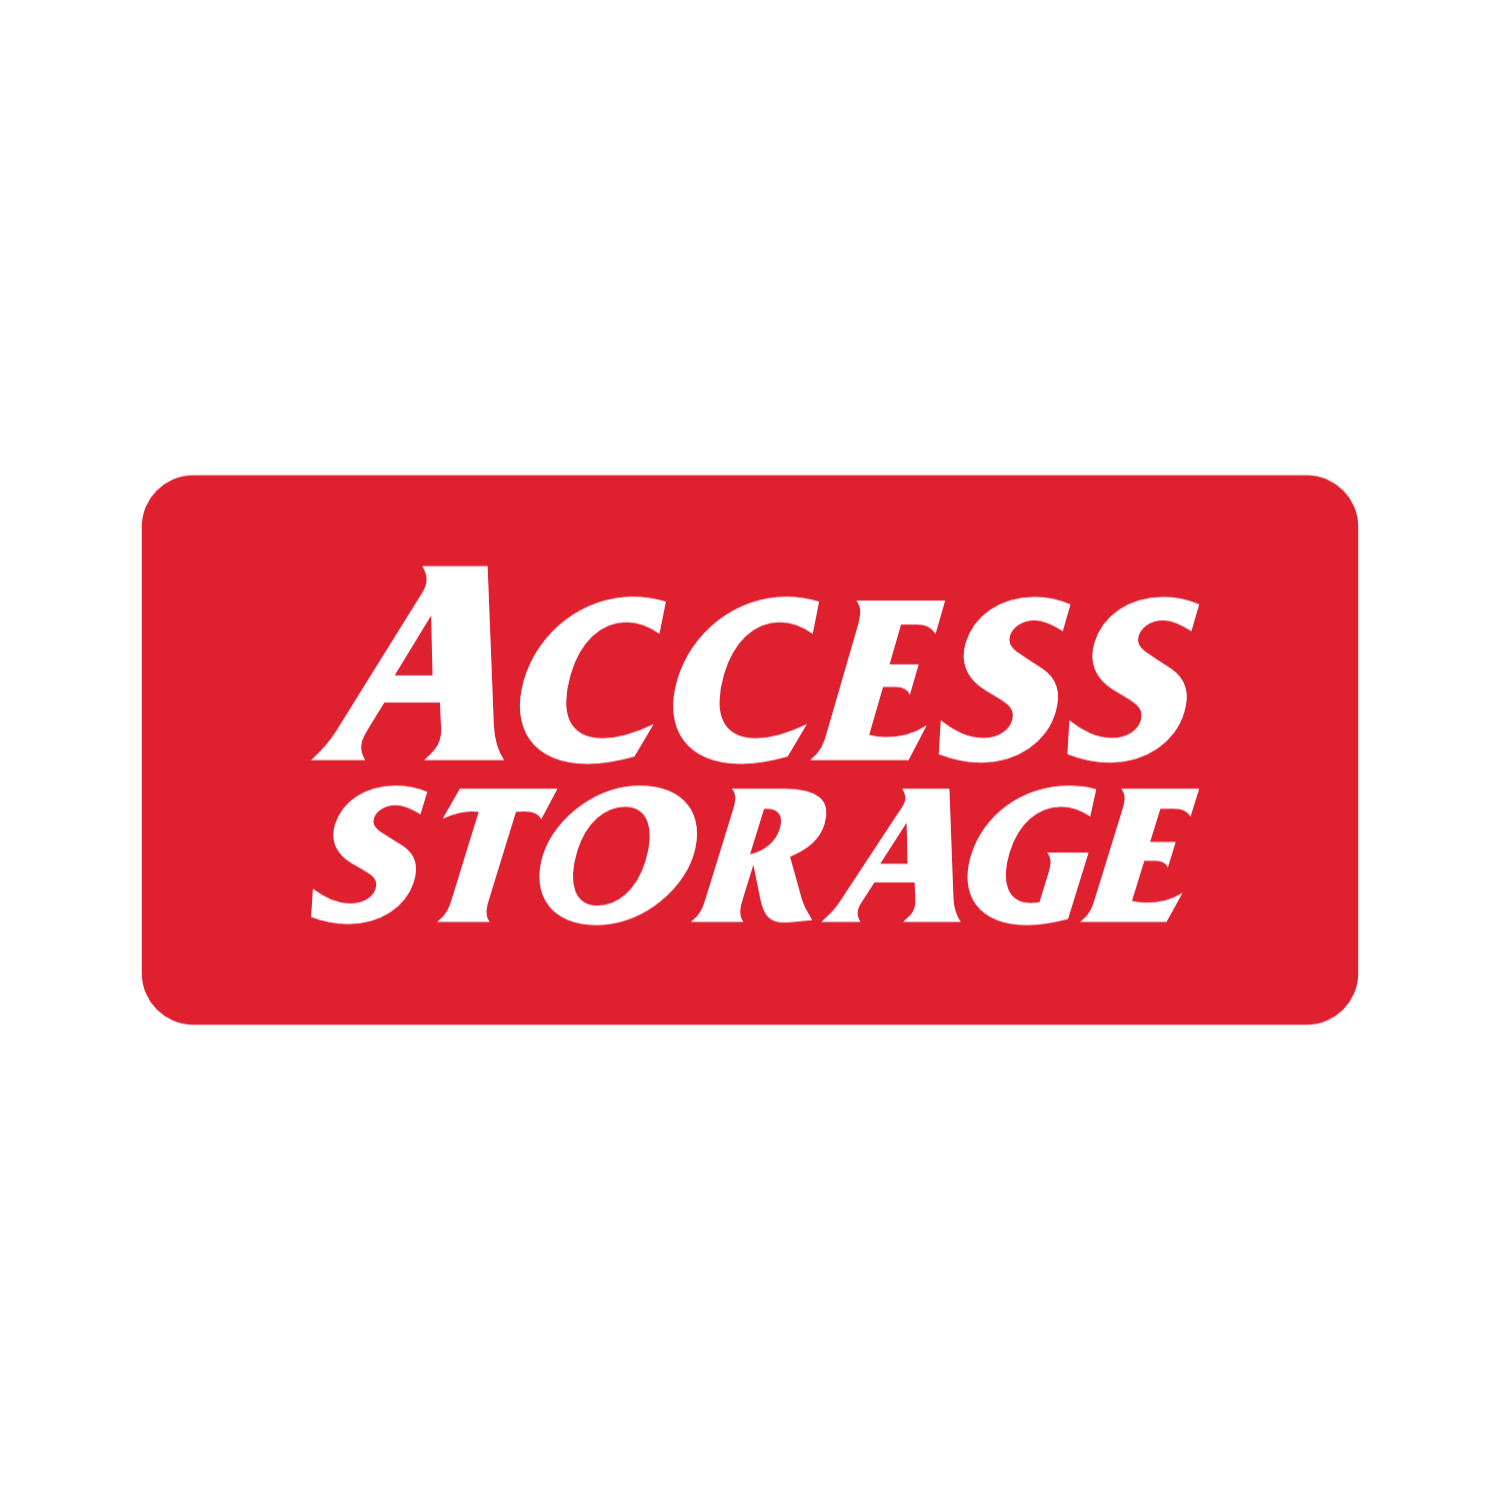 Access Storage - Moose Jaw - North (Self-Serve) - Self-Storage